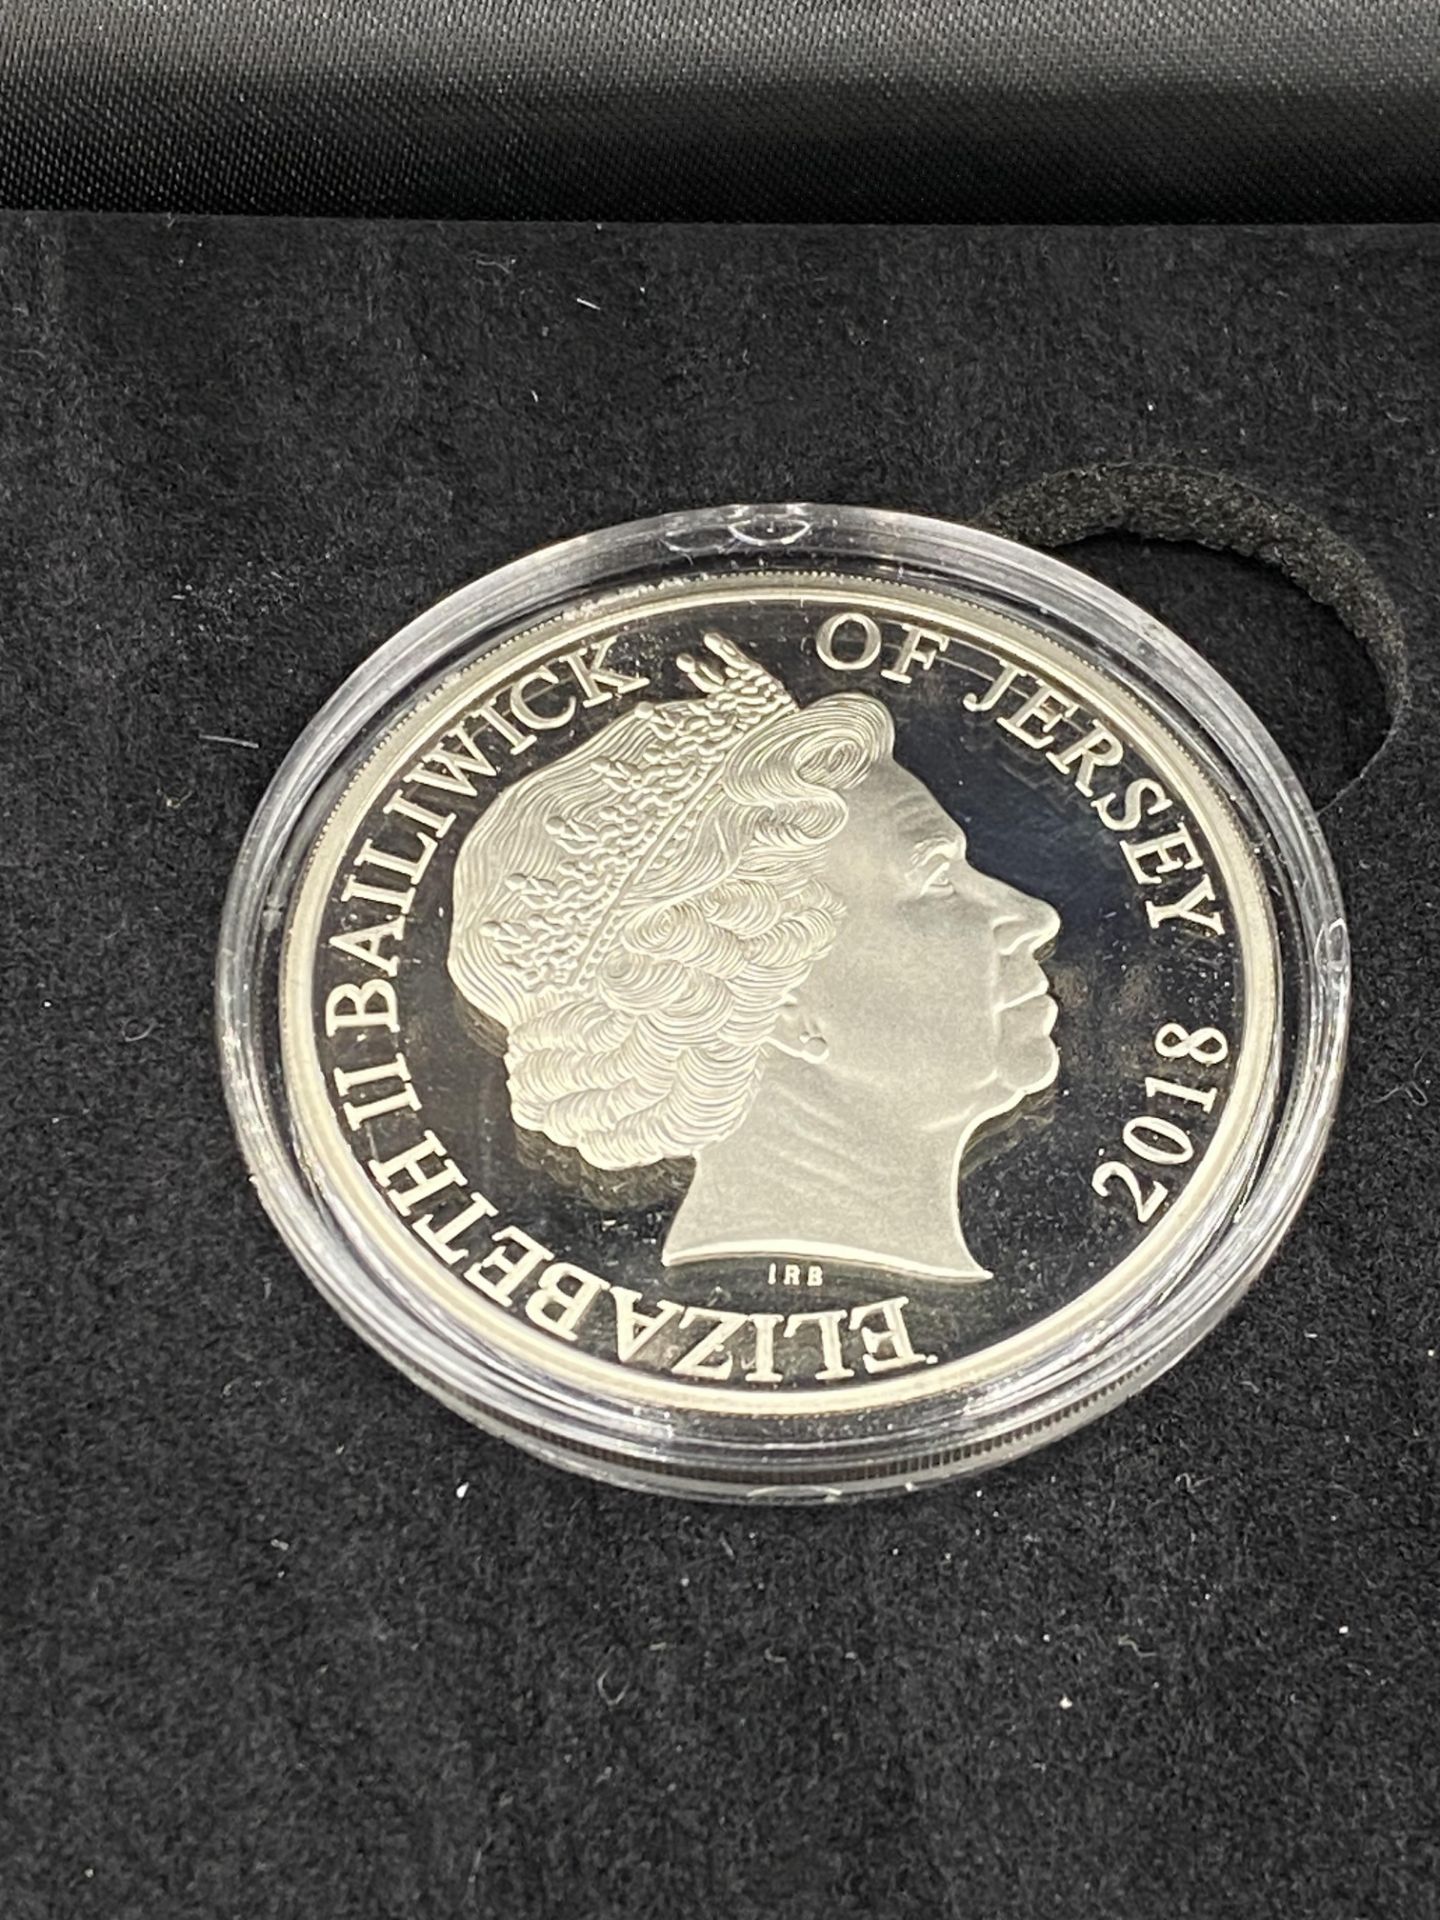 Queen Elizabeth Platinum Wedding Anniversary silver proof coin set - Image 5 of 8